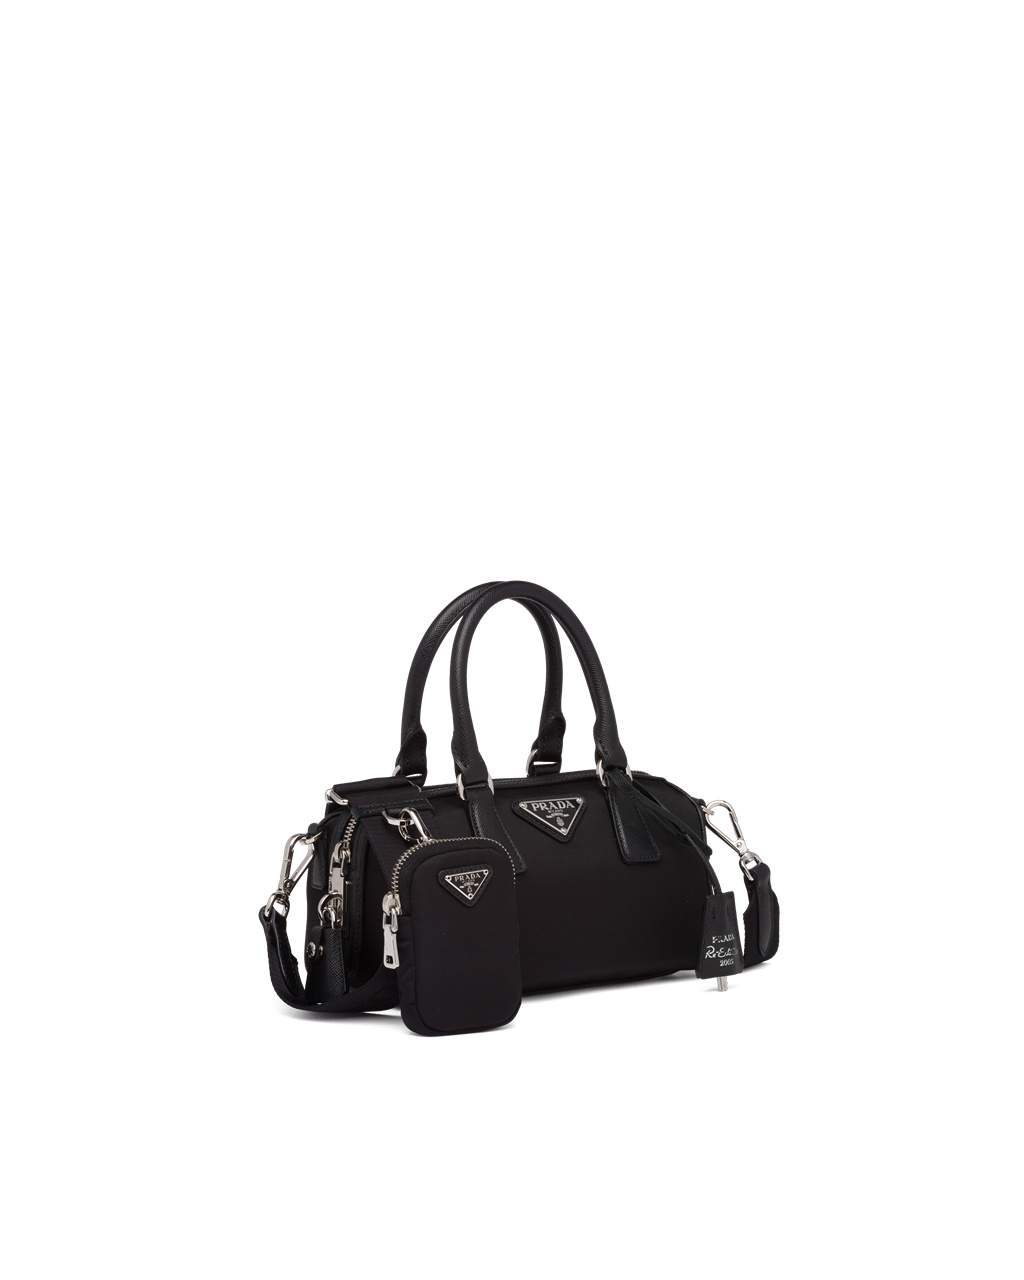 Prada Prada Re-edition 2005 Re-nylon Handbag Black | 1570SHPTX